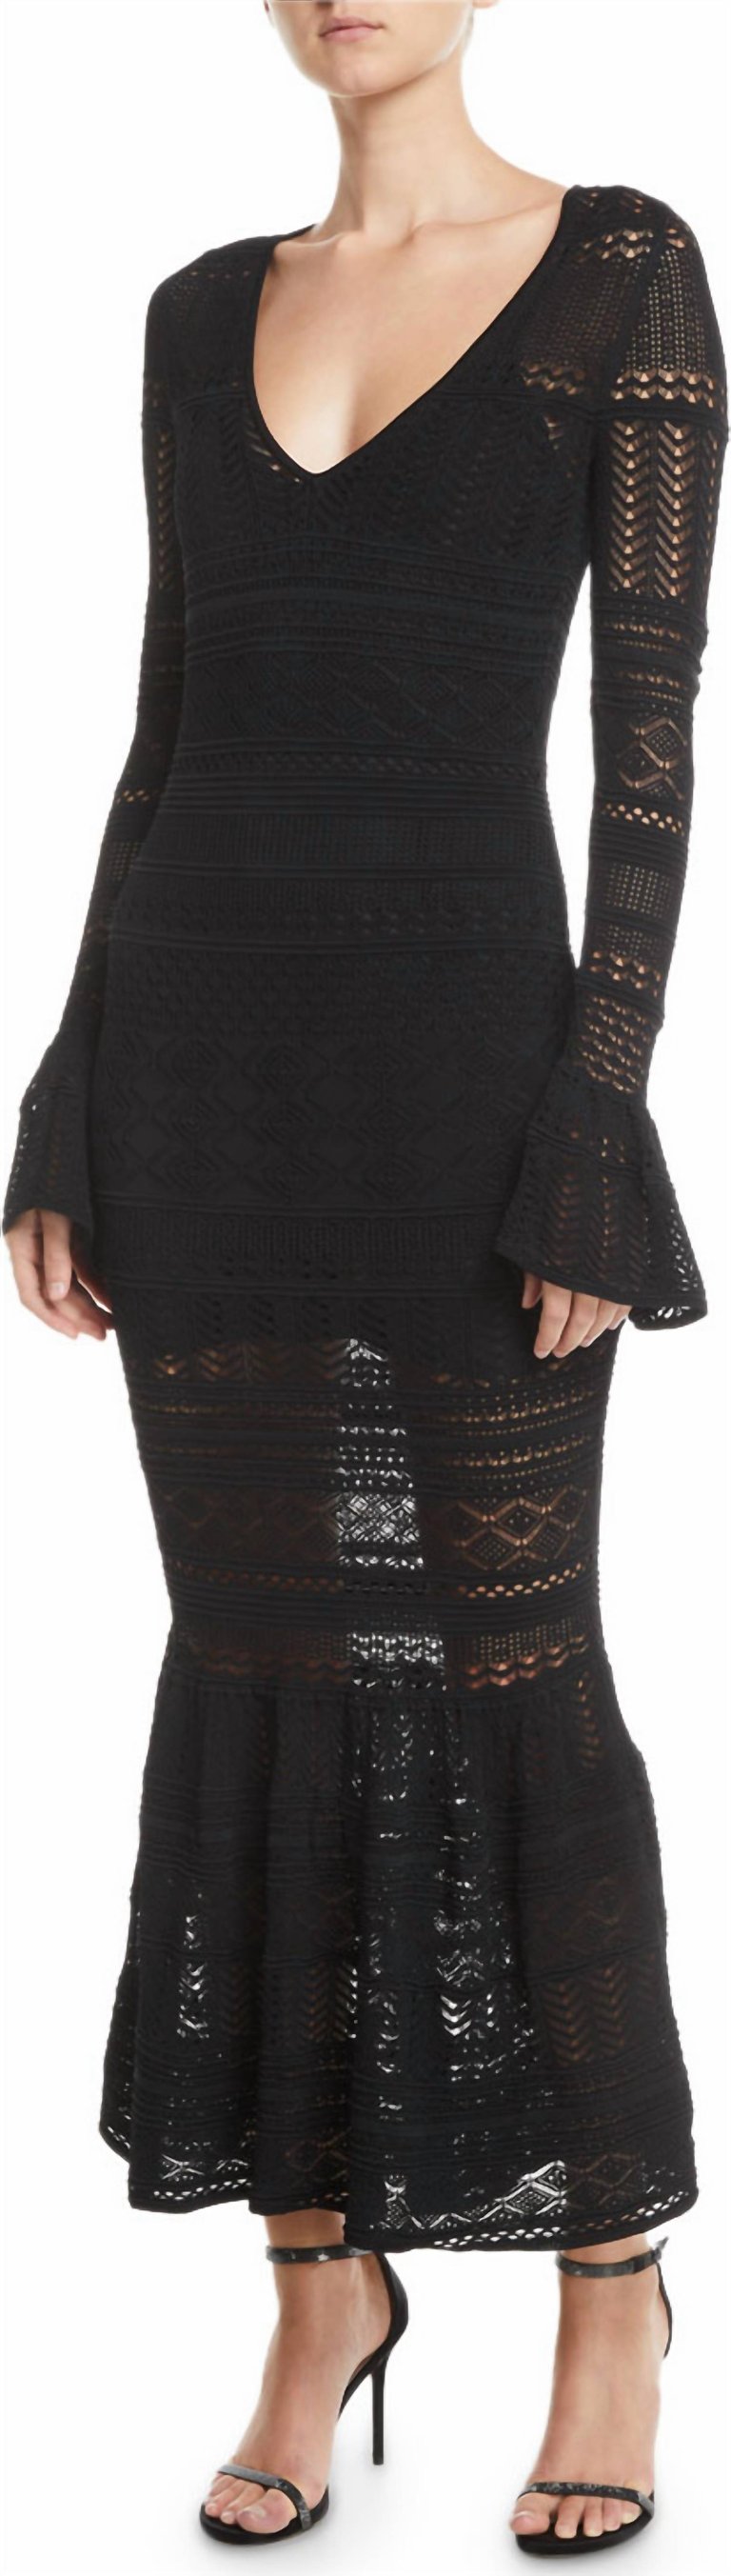 Darcie Knitted Dress - Black